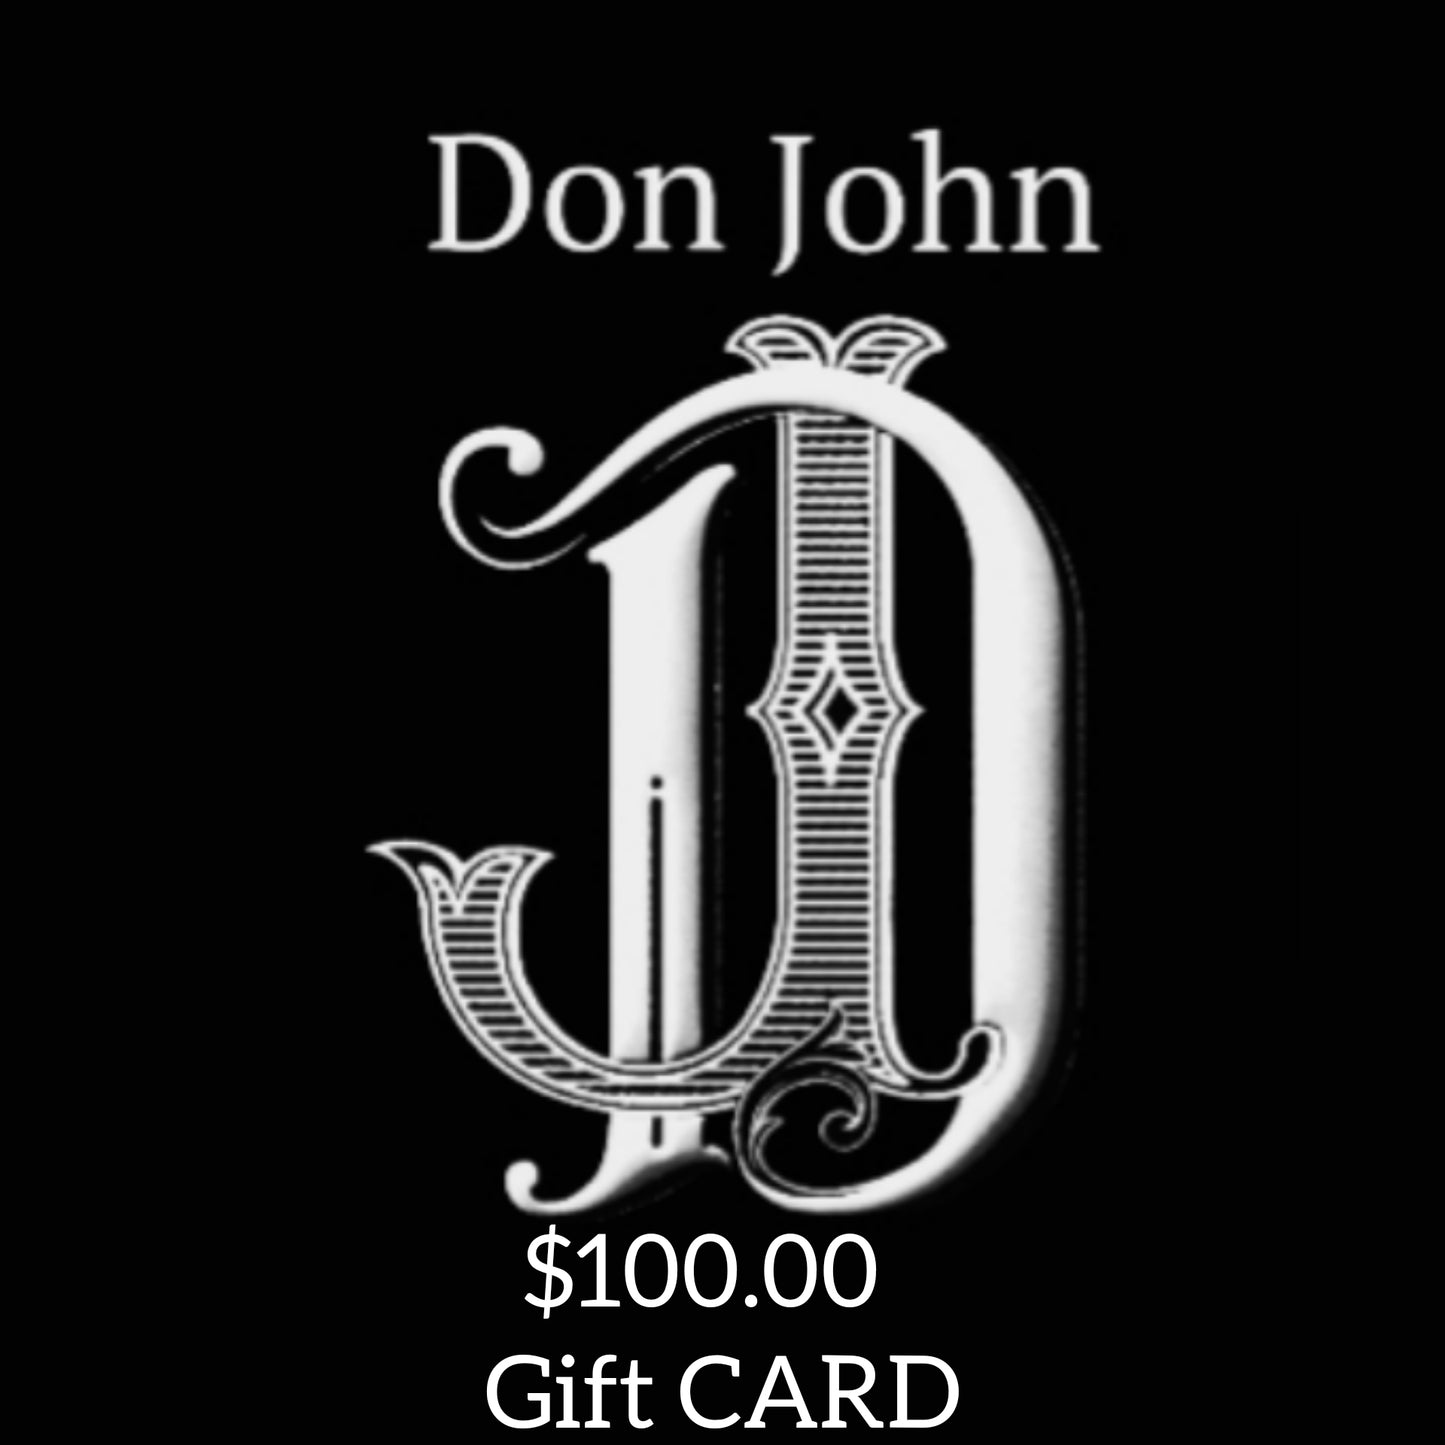 DON JOHN Gift Cards